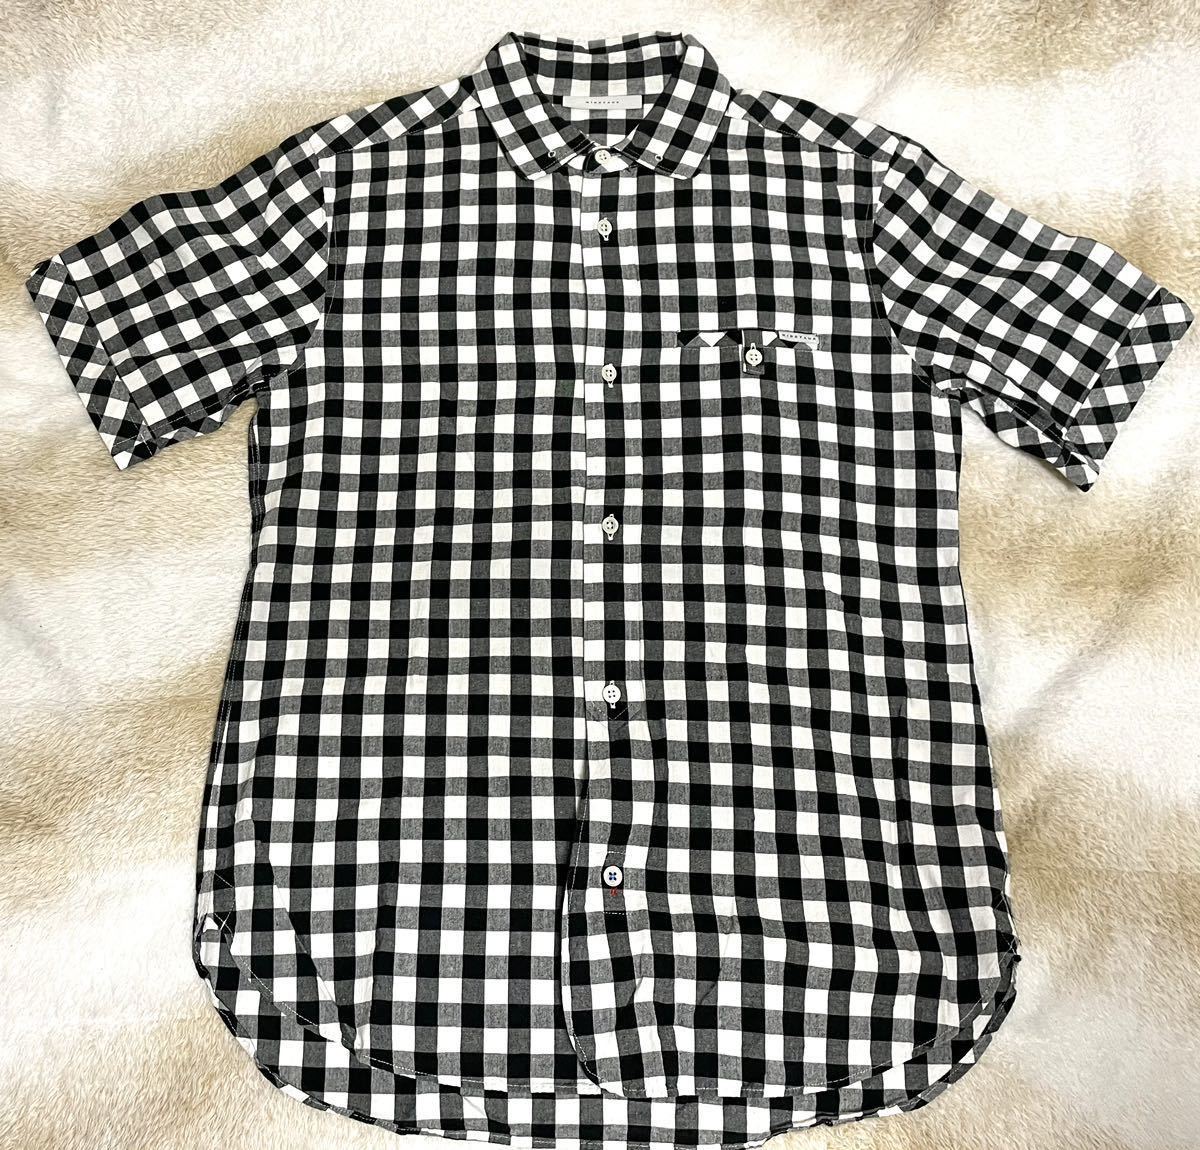 MINOTAUR ミノトール シャツ 半袖 (メンズM) ギンガム チェックの画像1